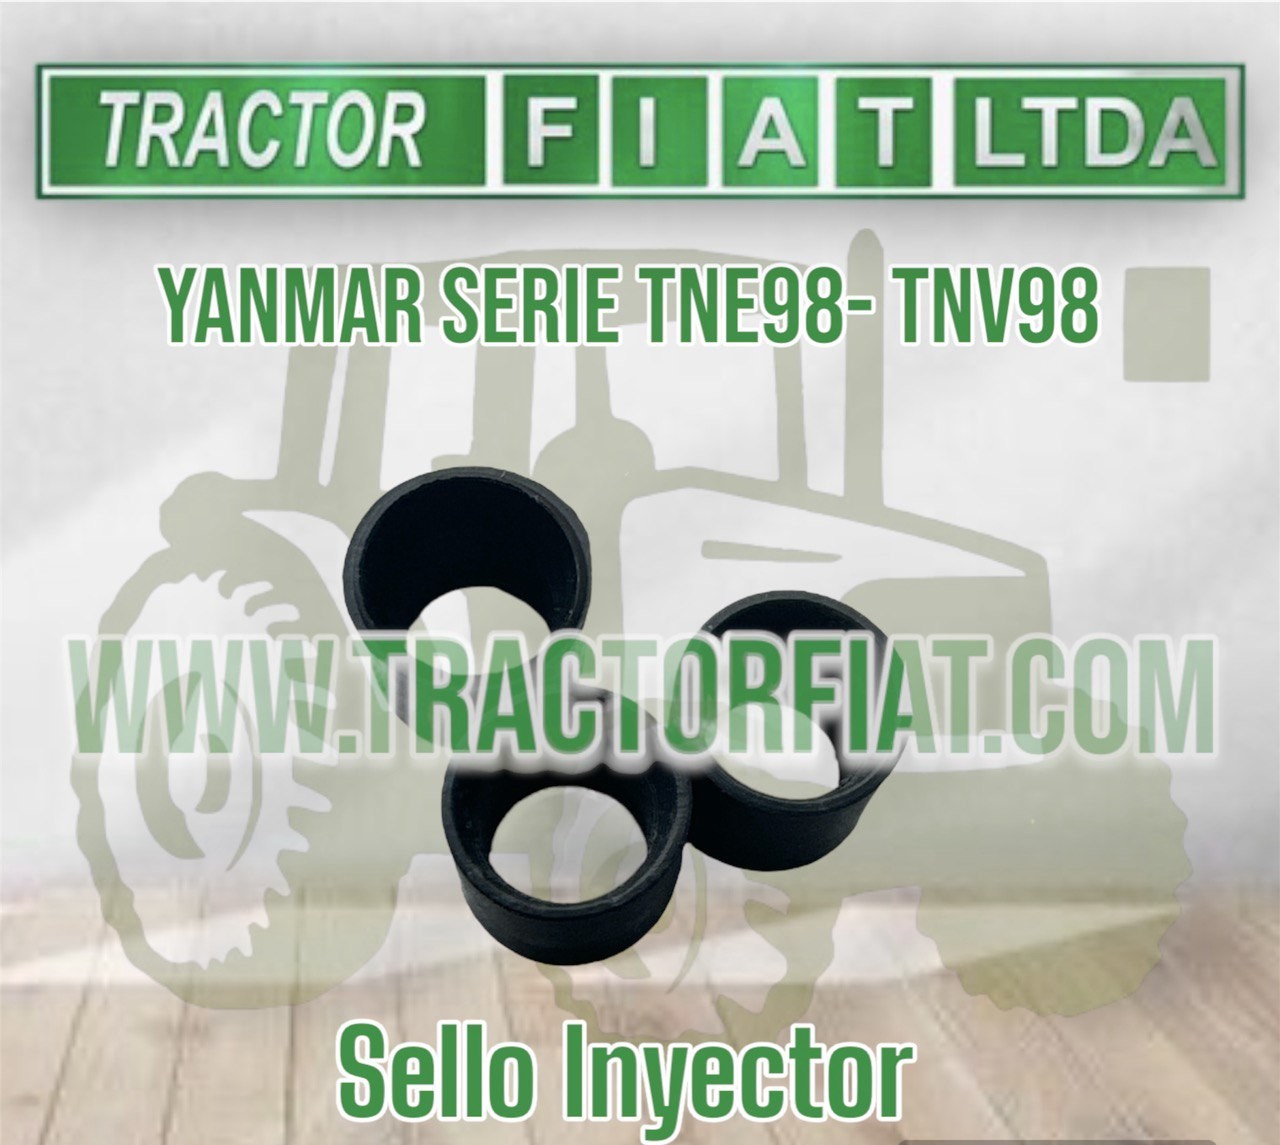 SELLO INYECTOR -MOTOR YANMAR SERIES TNE98/TNV98